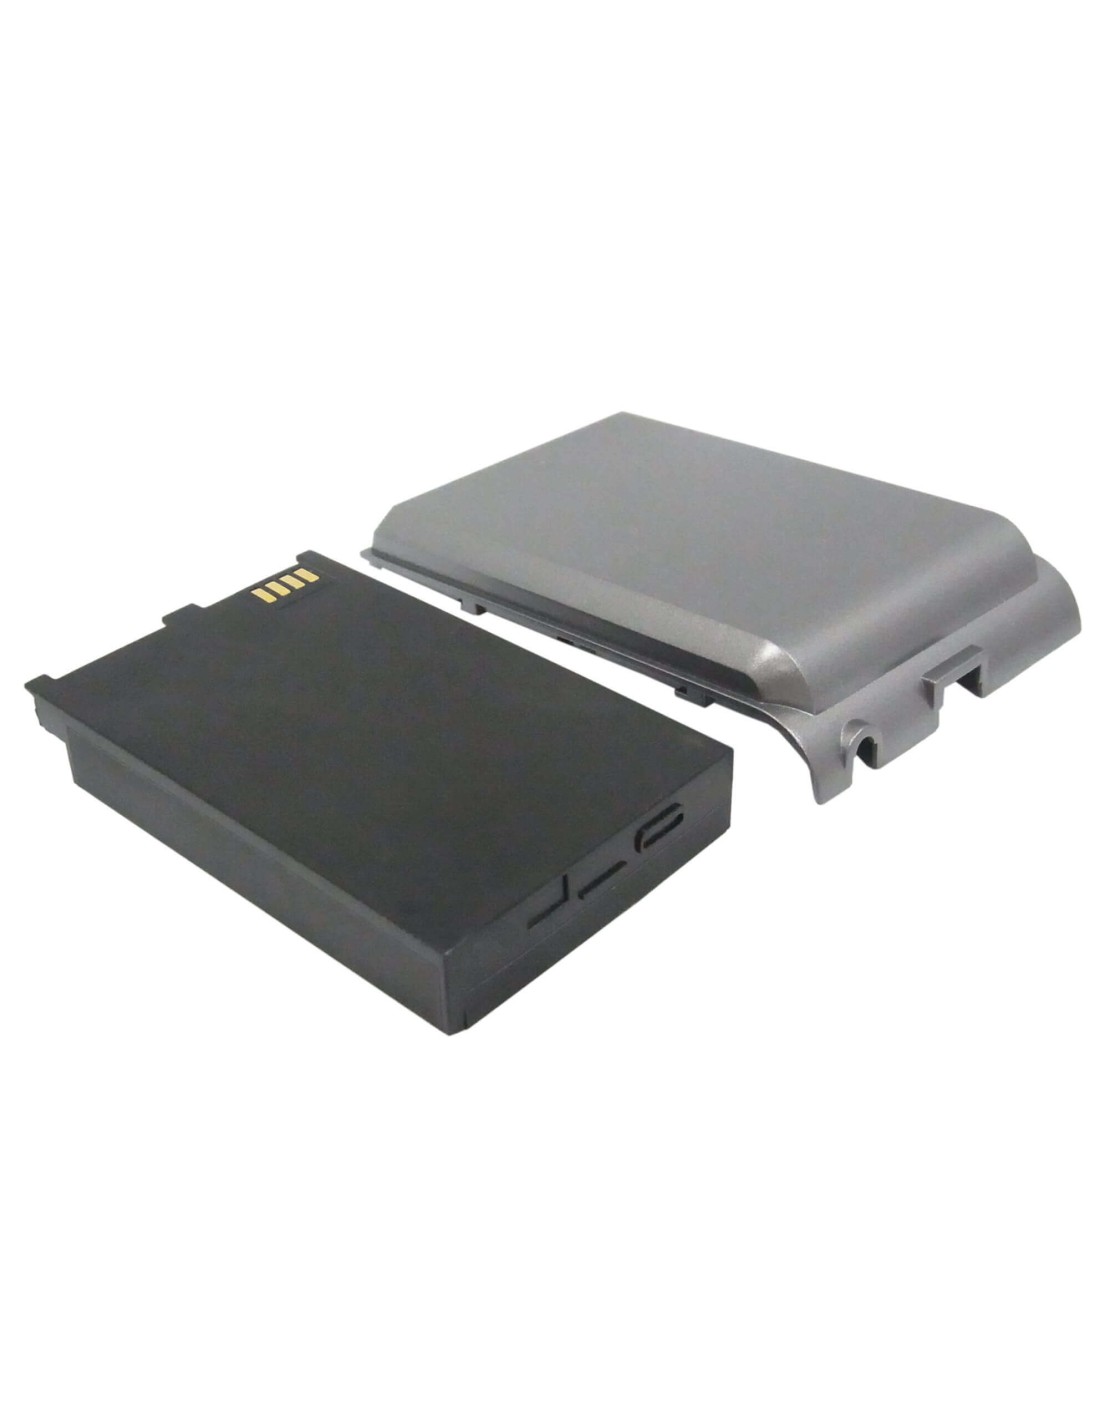 Battery for Fujitsu Loox T800, Loox T810, Loox T830 3.7V, 3060mAh - 11.32Wh